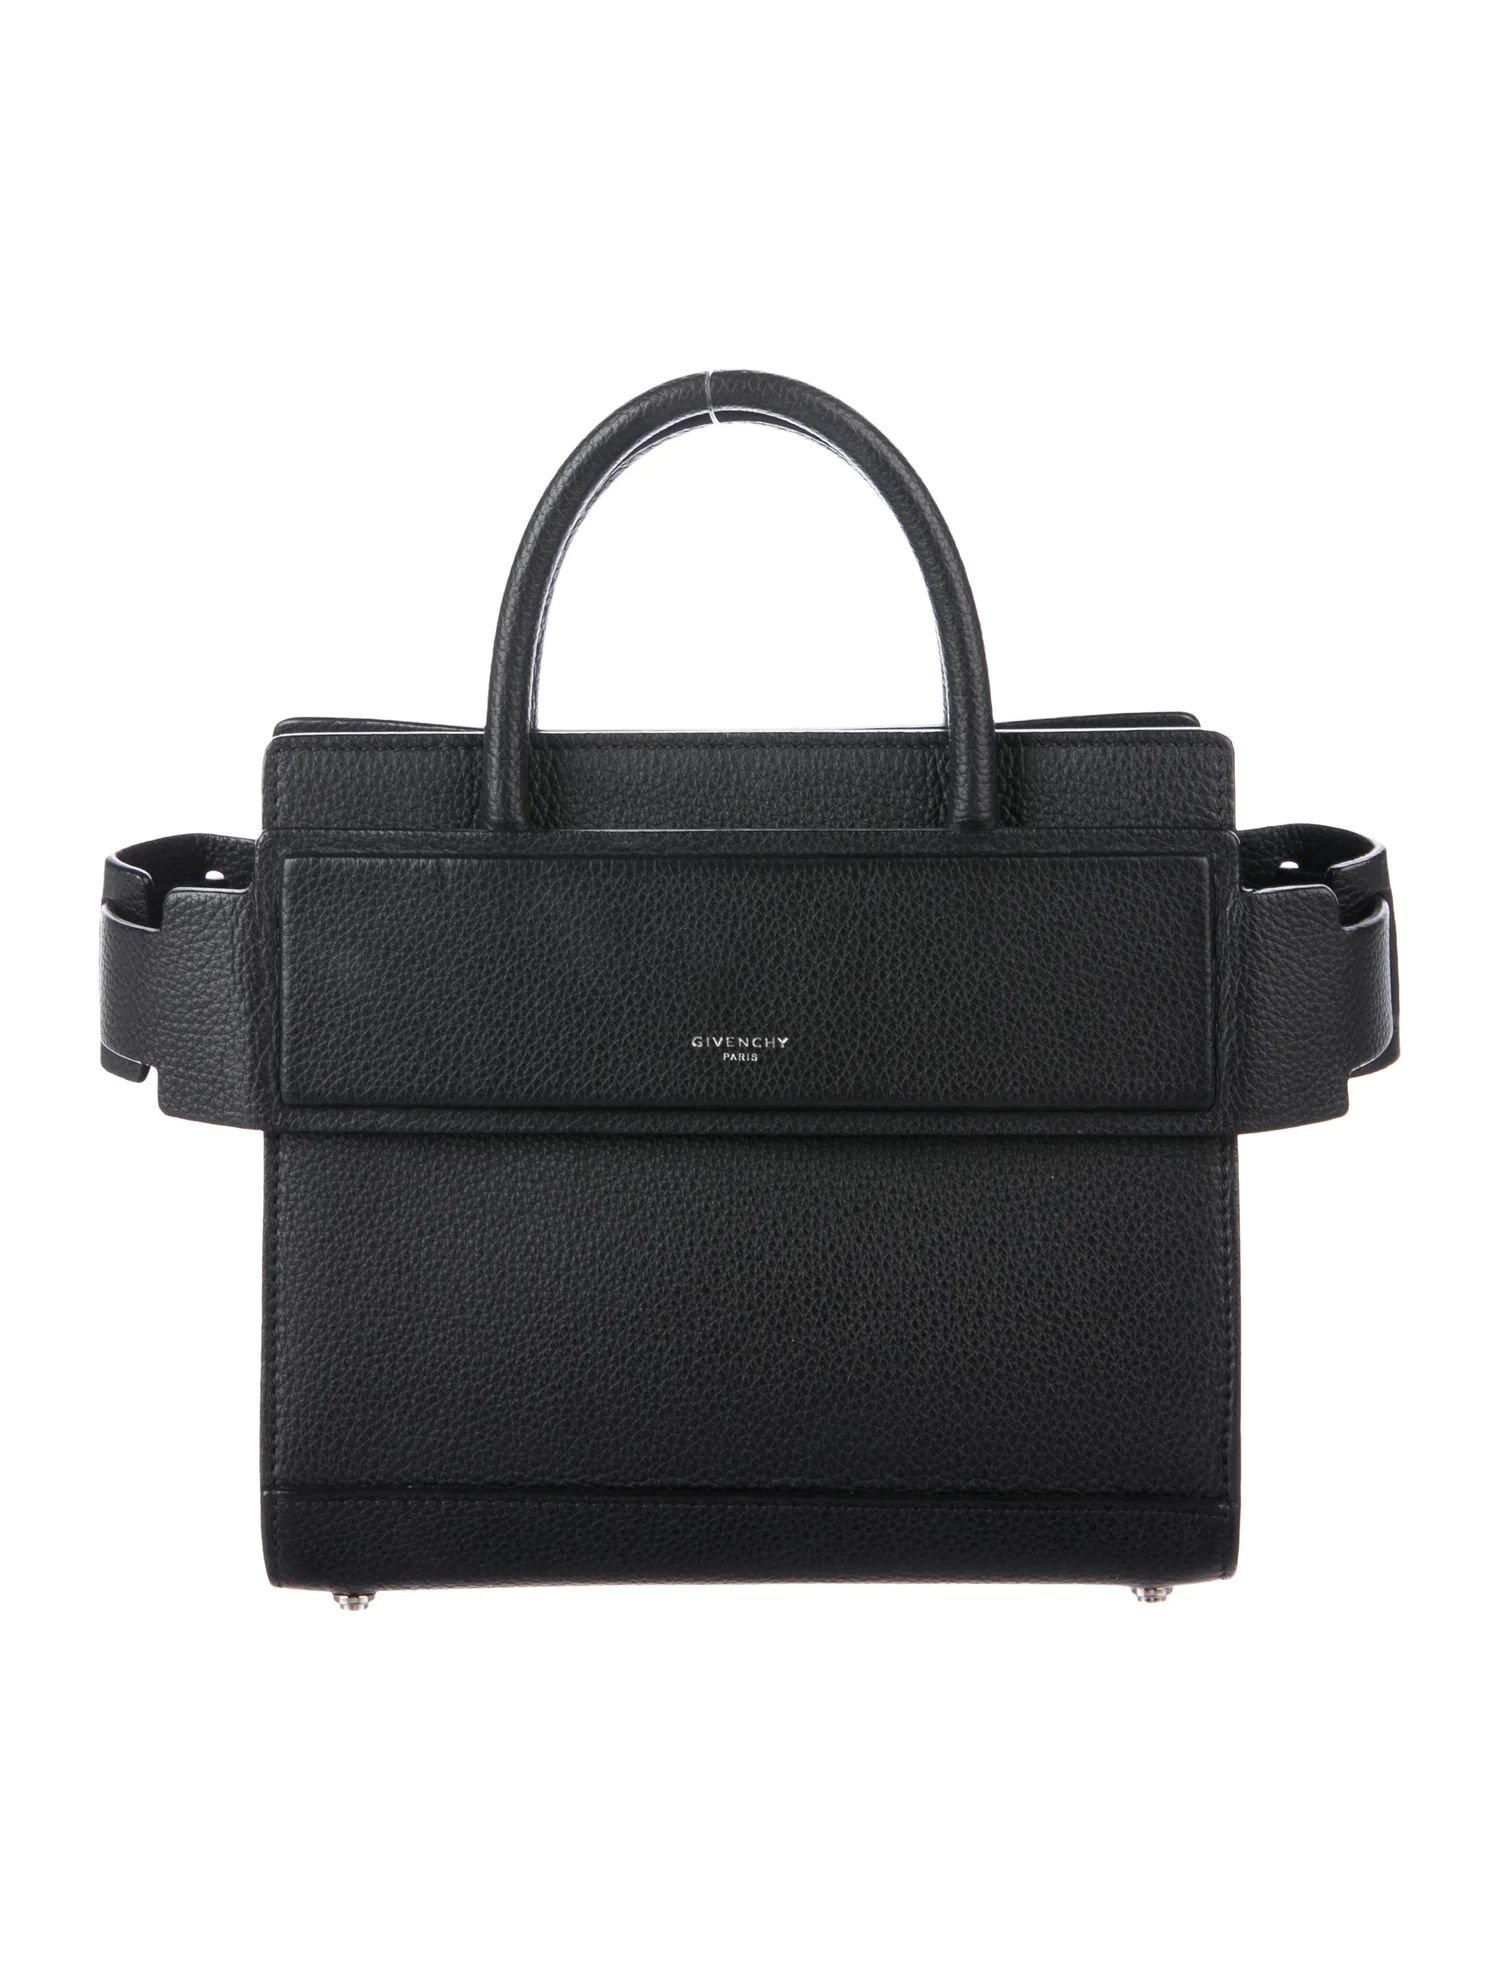 Givenchy Mini Horizon Satchel - Handbags -
          GIV71631 | The RealReal | The RealReal